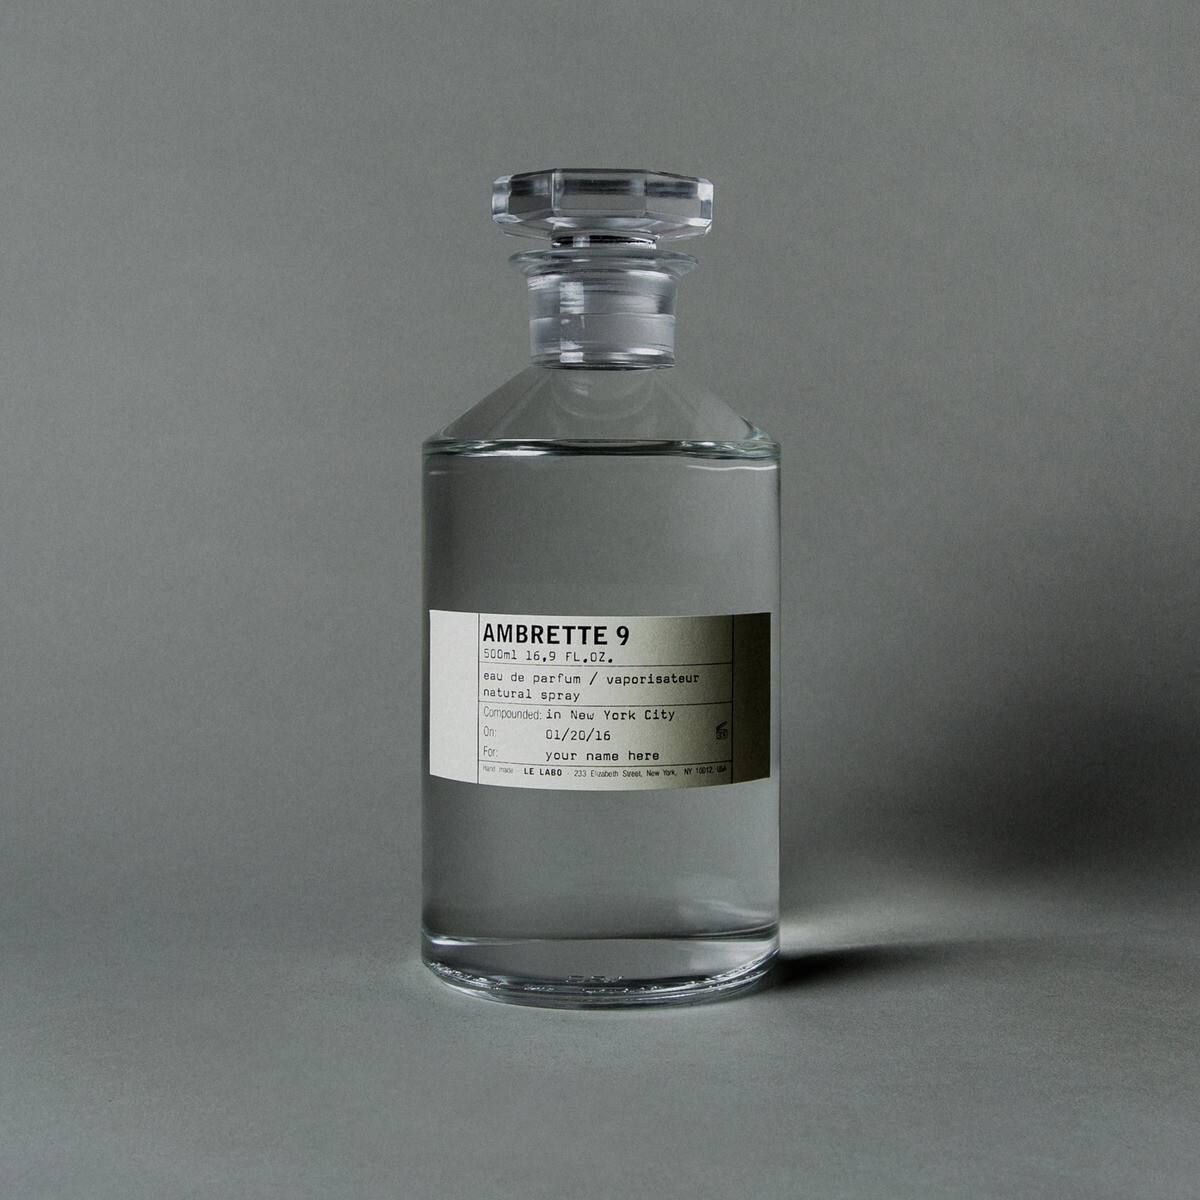 AMBRETTE 9 | Le Labo Fragrances